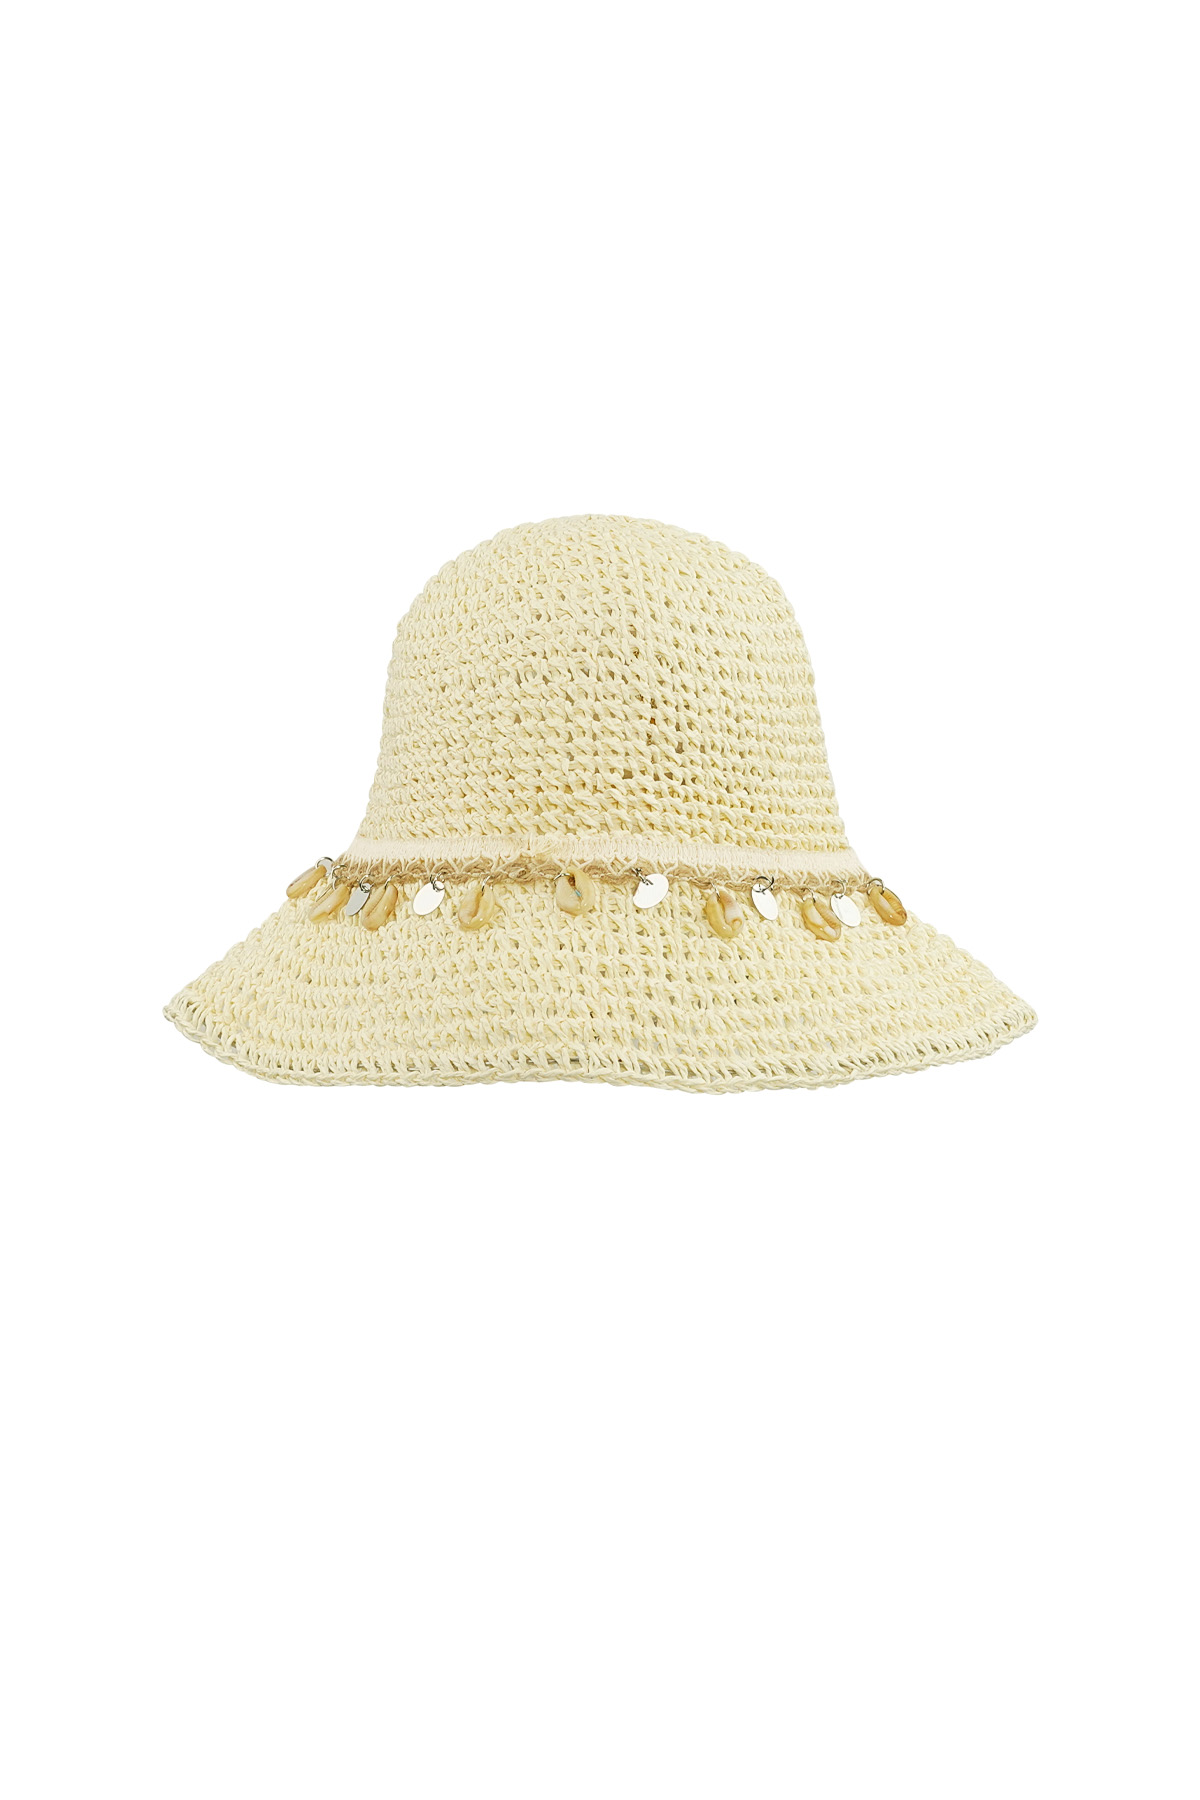 Beach hat with shells - beige 